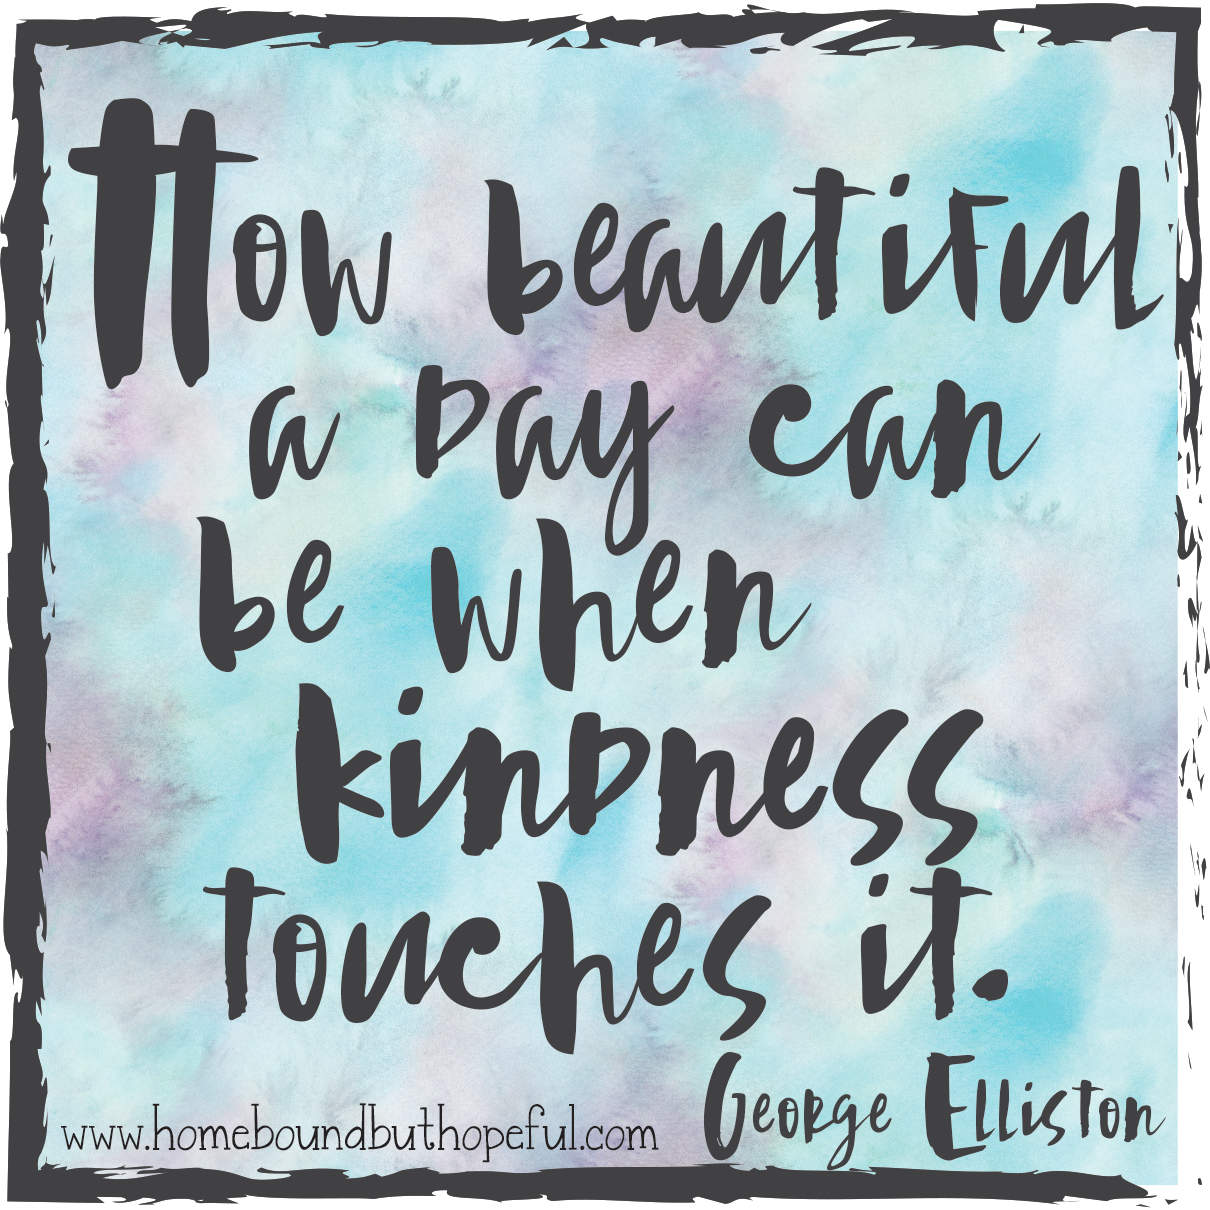 george elliston kindness quote